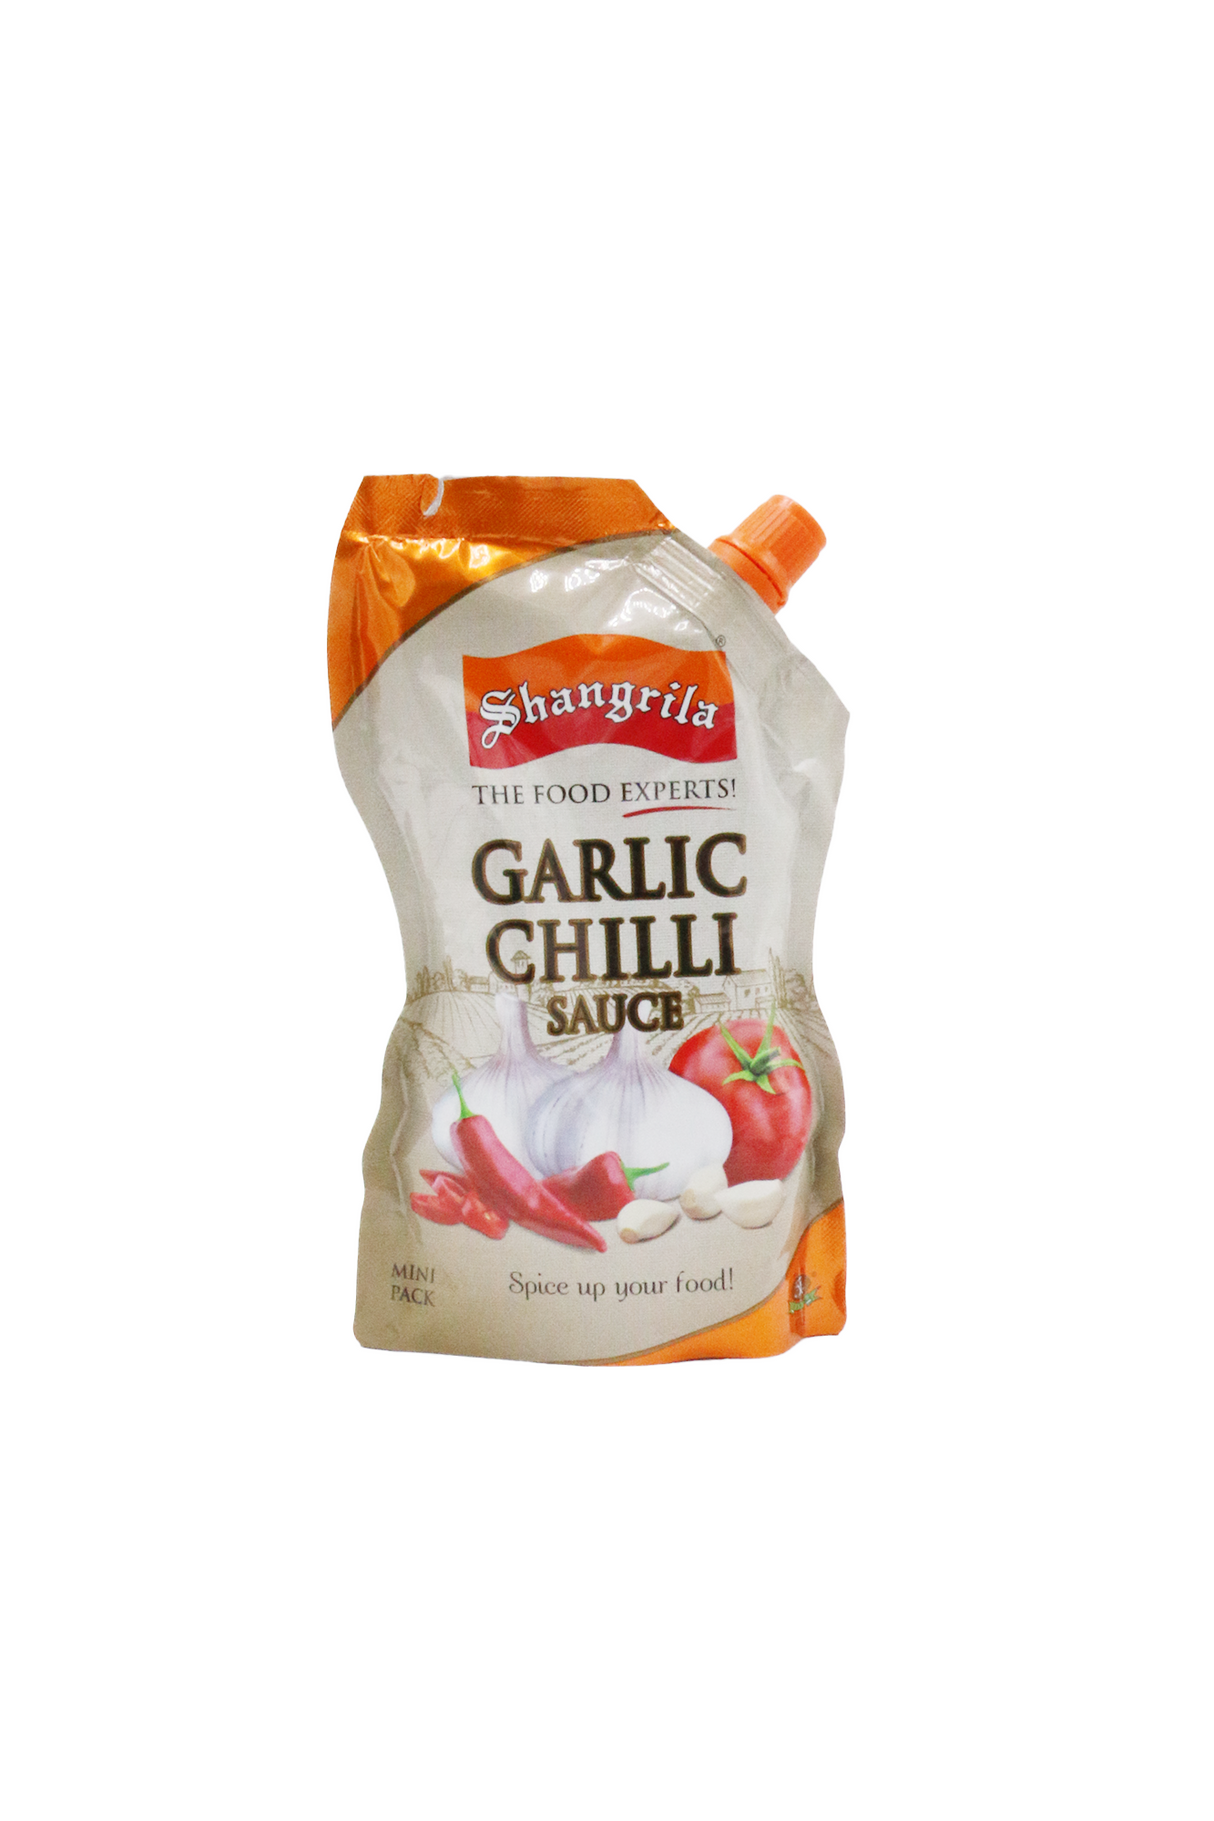 shangrila garlic chilli sauce 225g